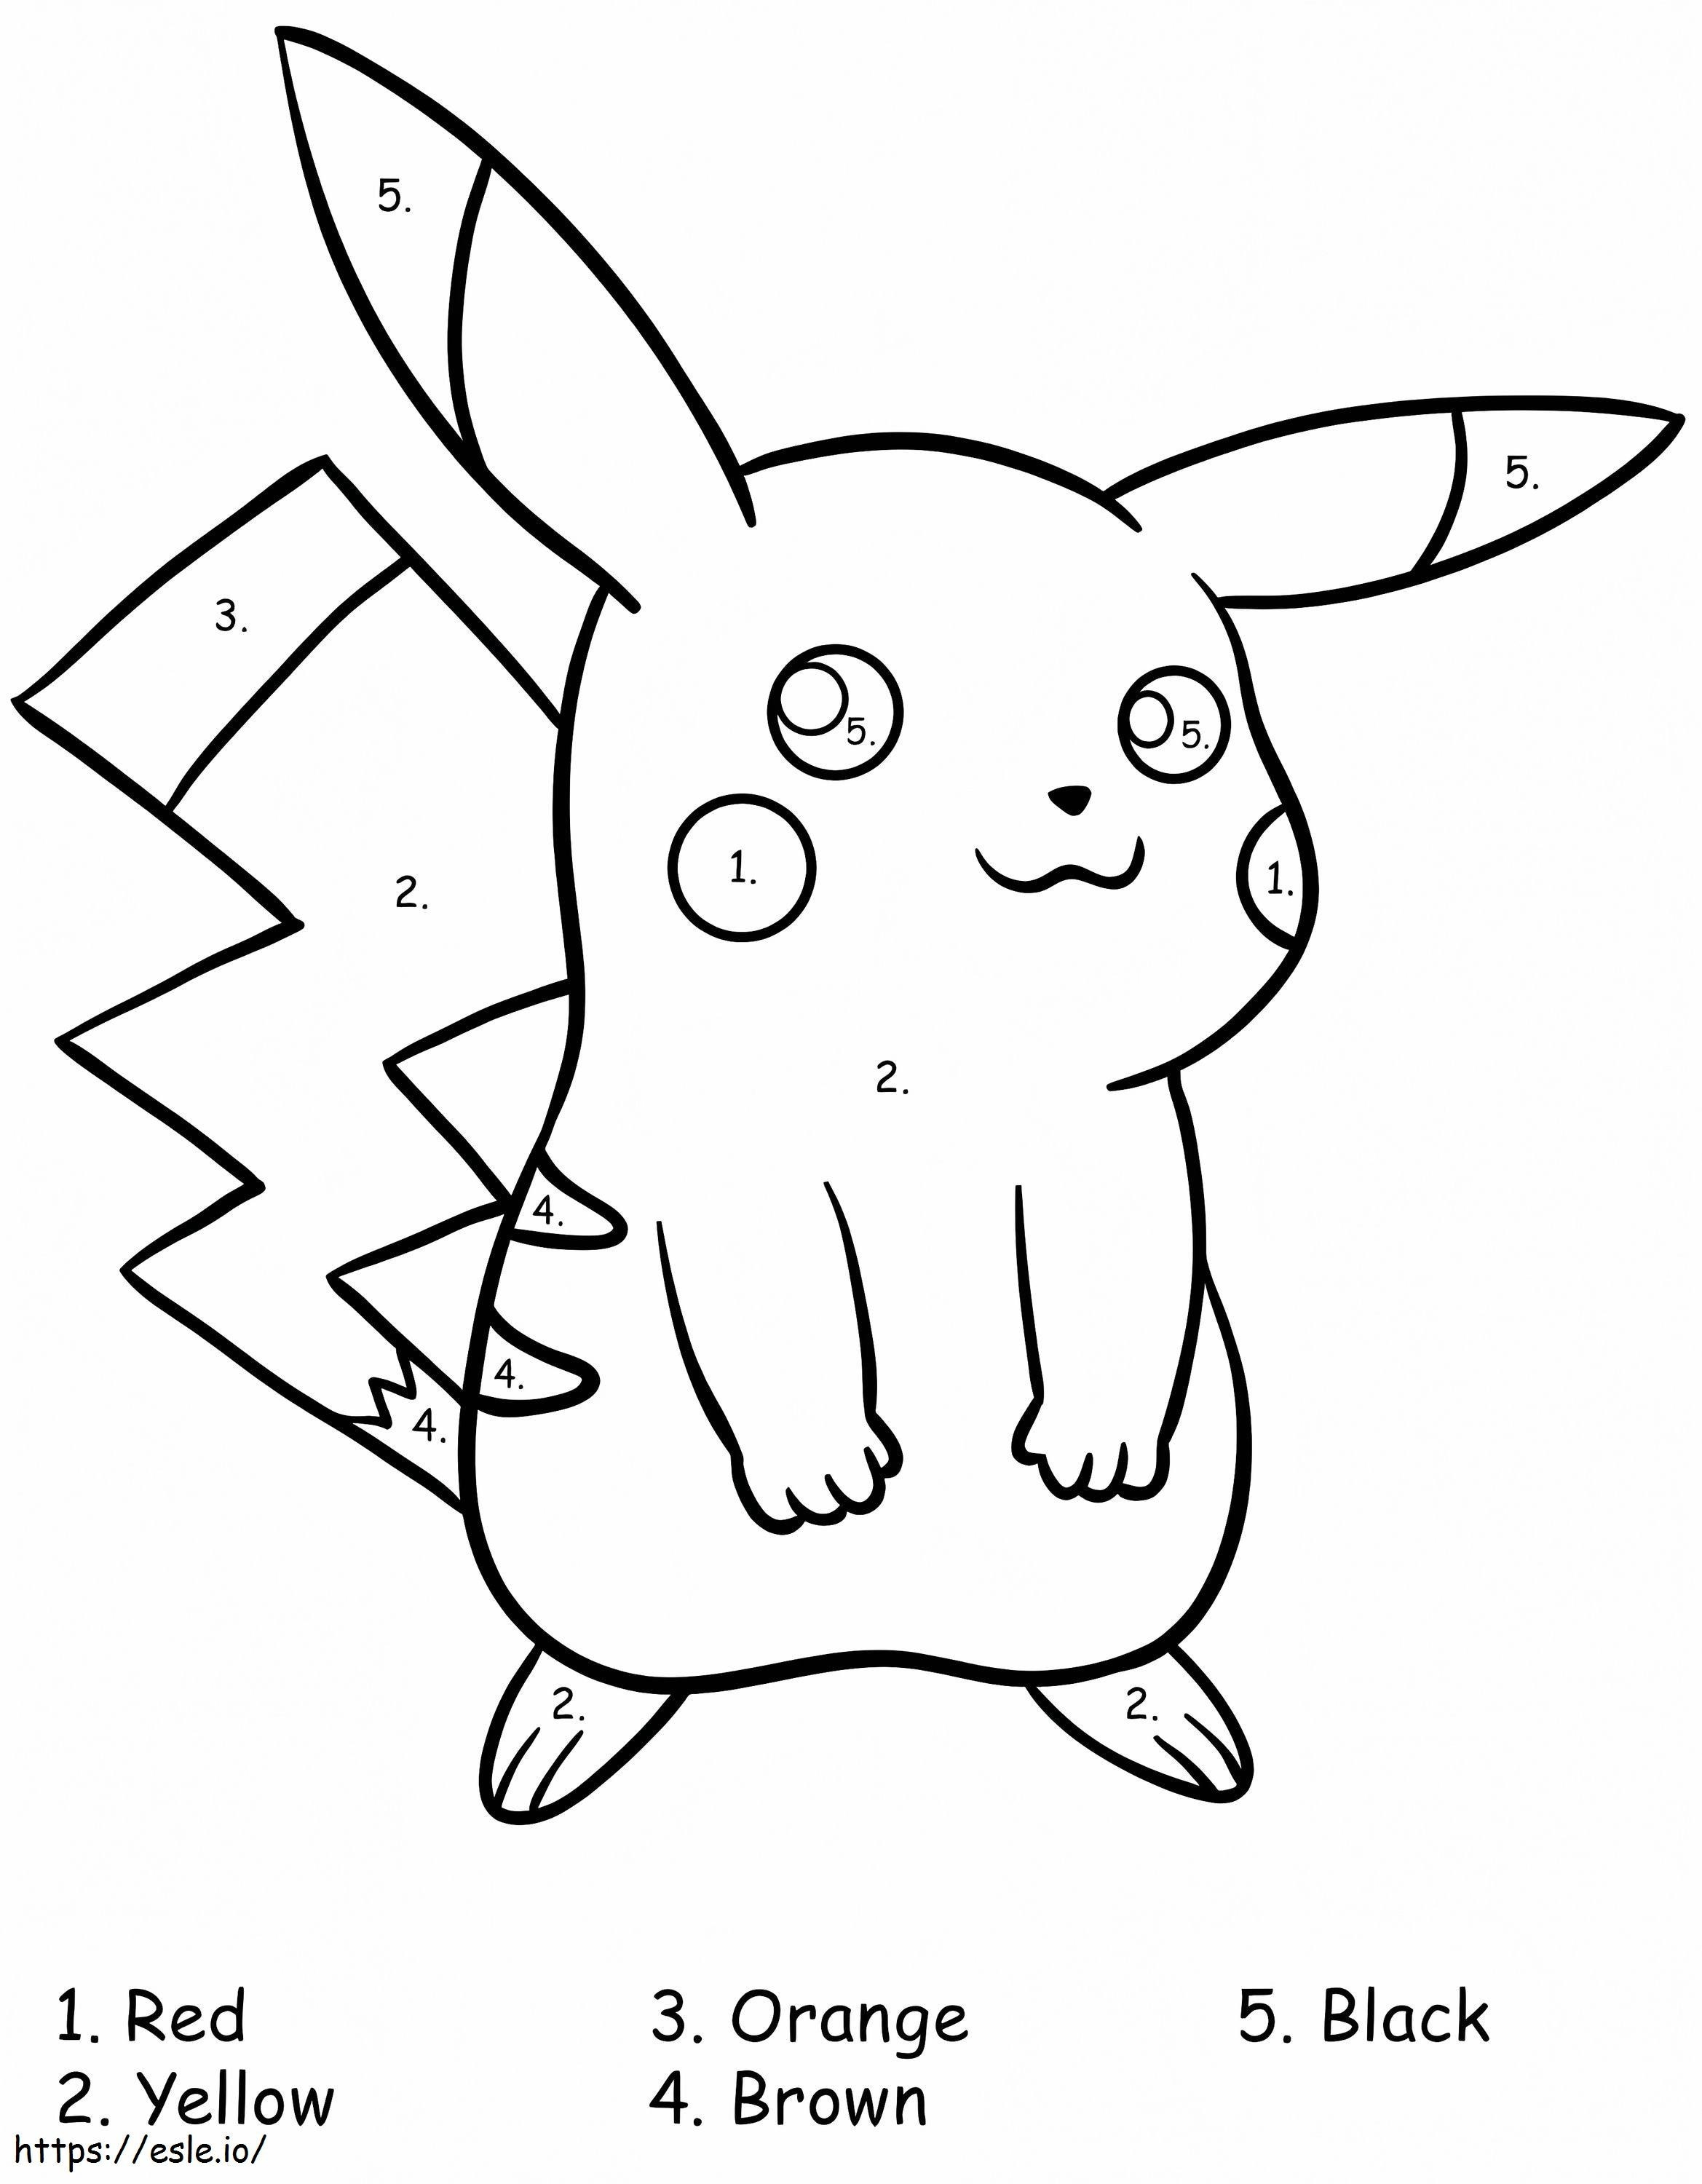 Cor do Pokémon Pikachu por número para colorir